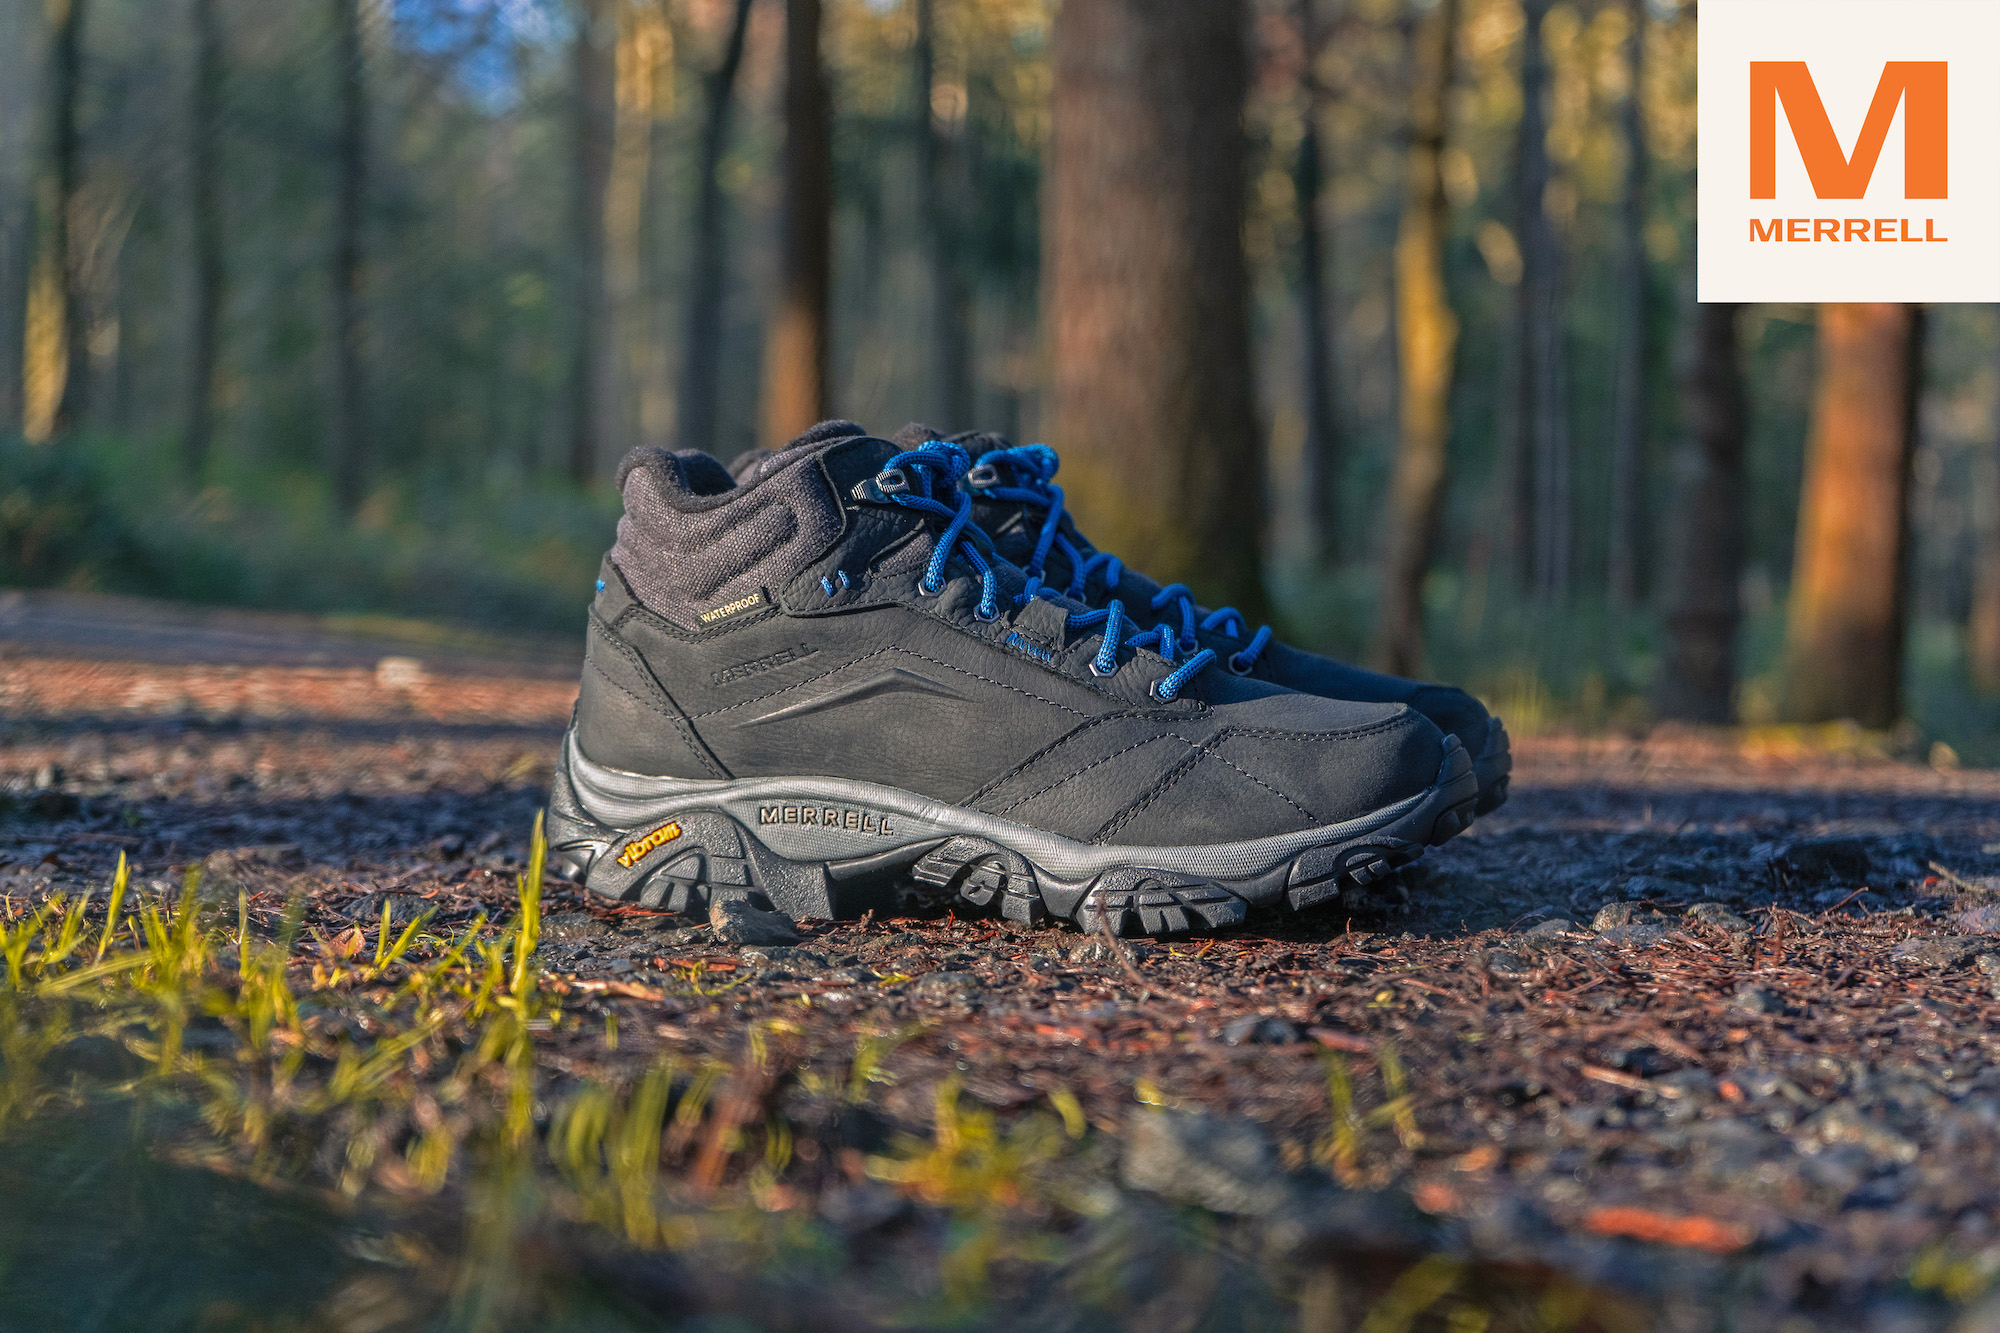 Mens Merrell Waterproof Walking Boots With A Vibram Sole - Moab Adventure Mid Plr WP J002165